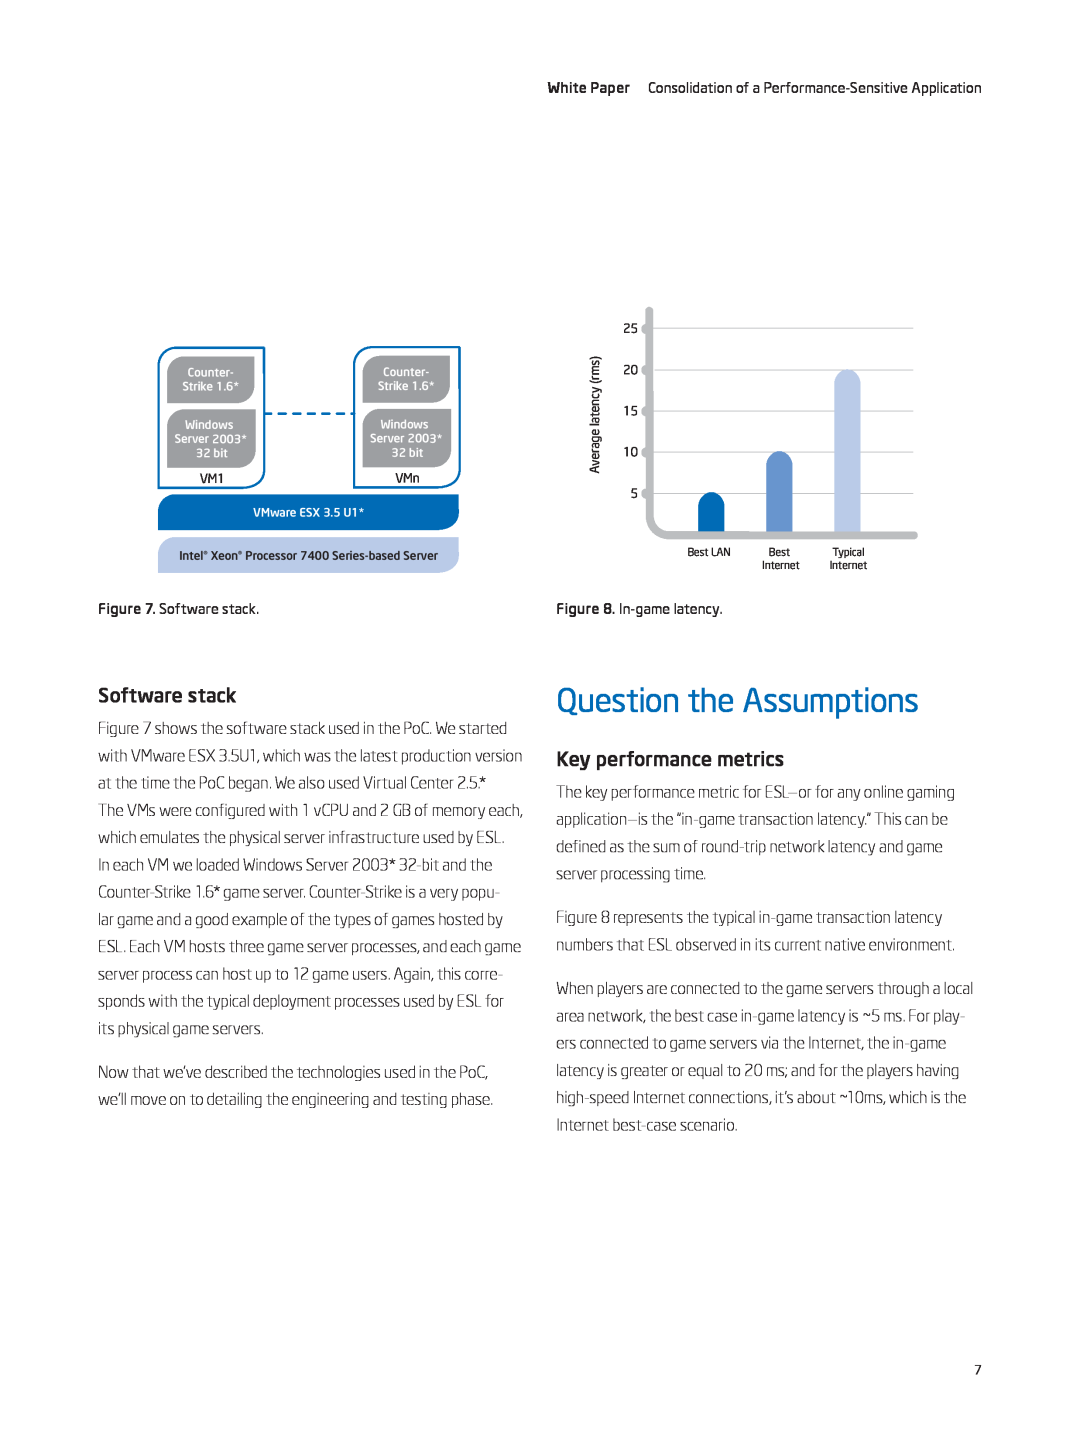 Intel 7400 manual Question the Assumptions, Software stack, Key performance metrics 